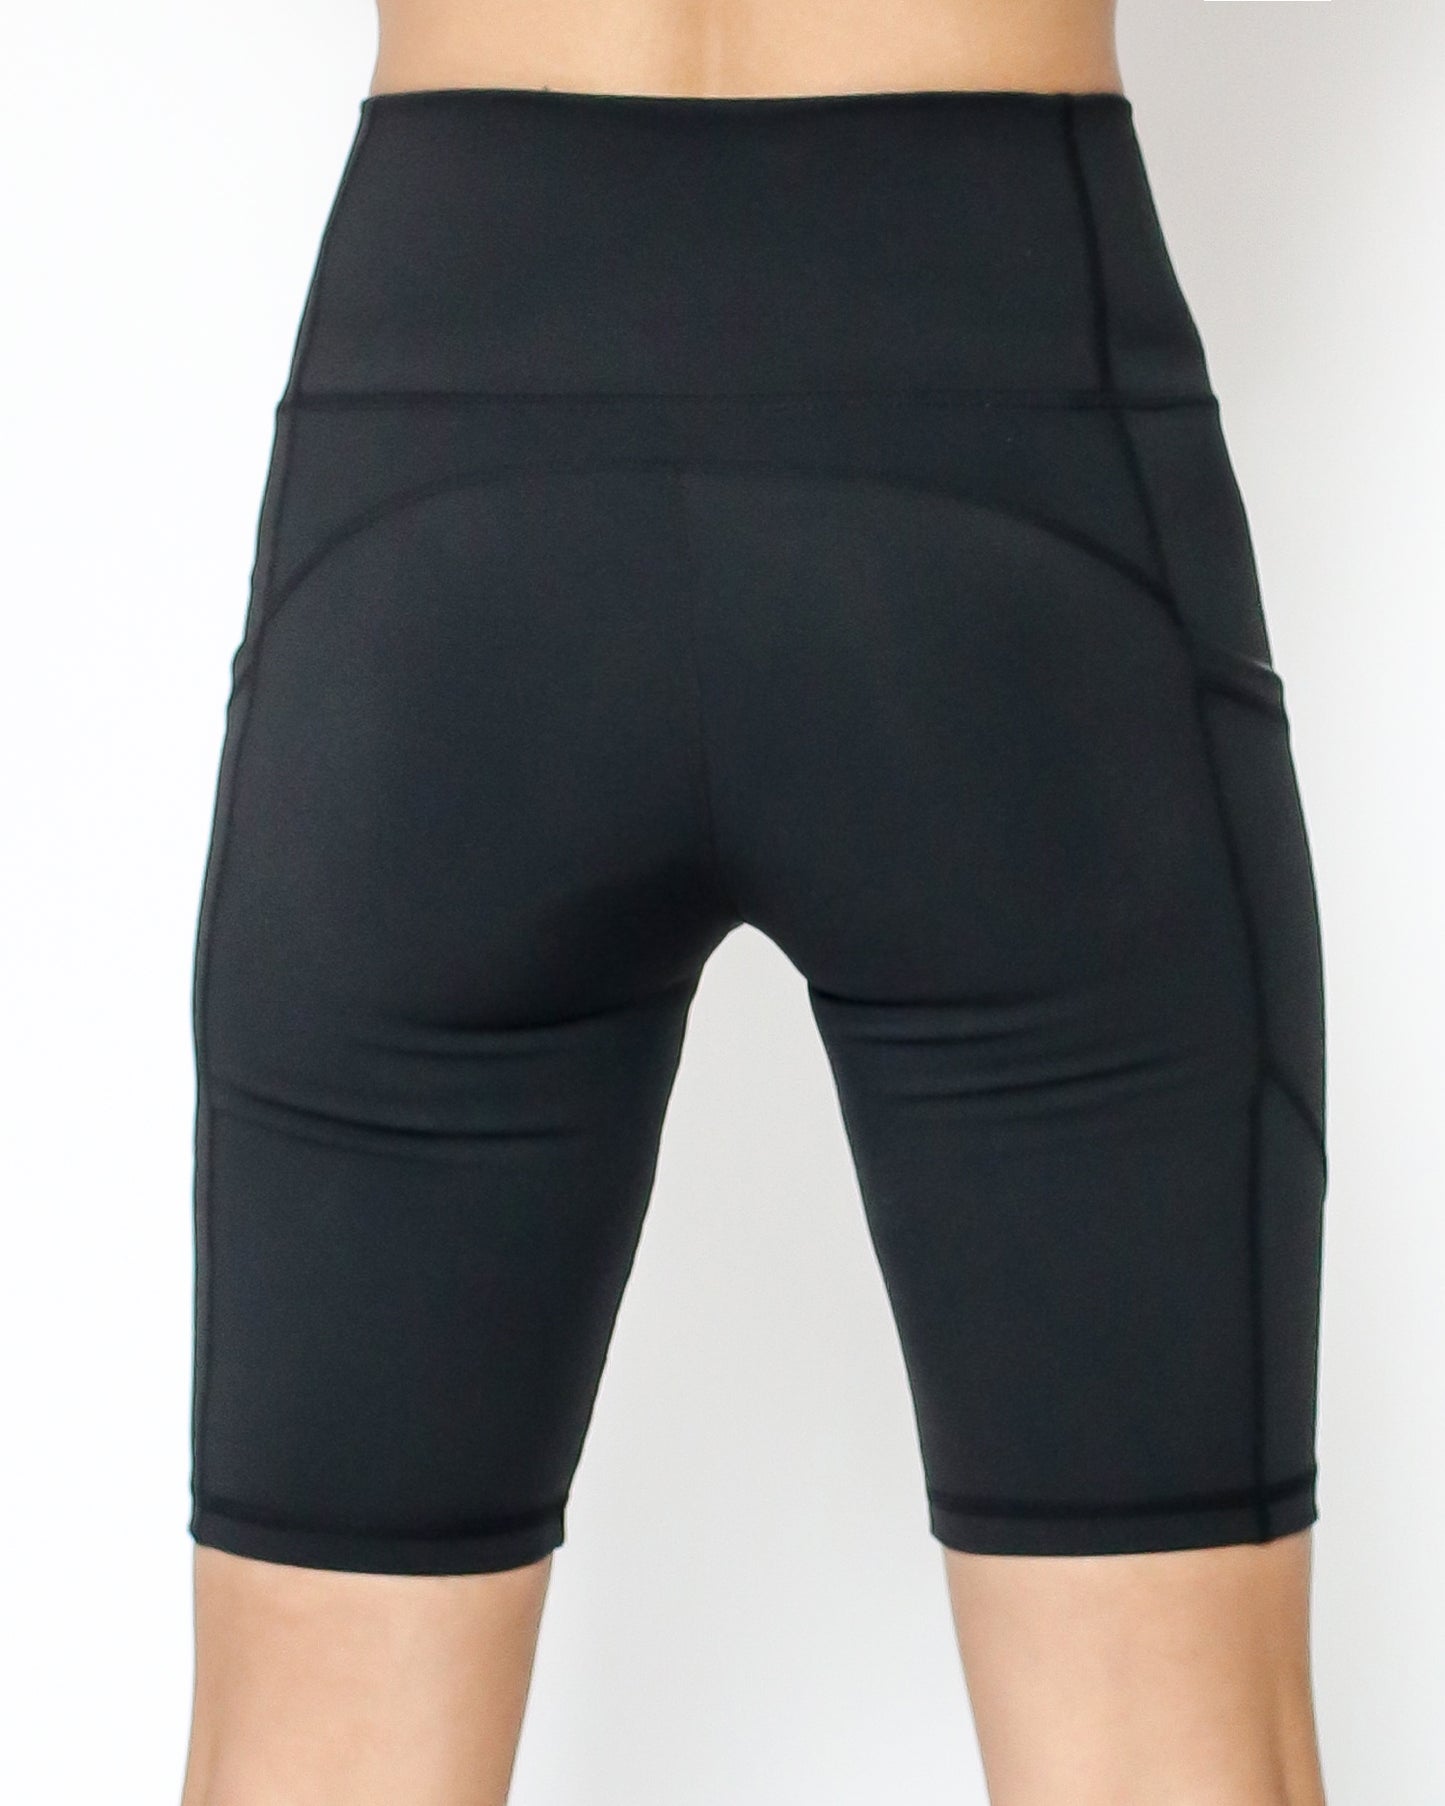 black 1/4 length sports legging *pre-order*